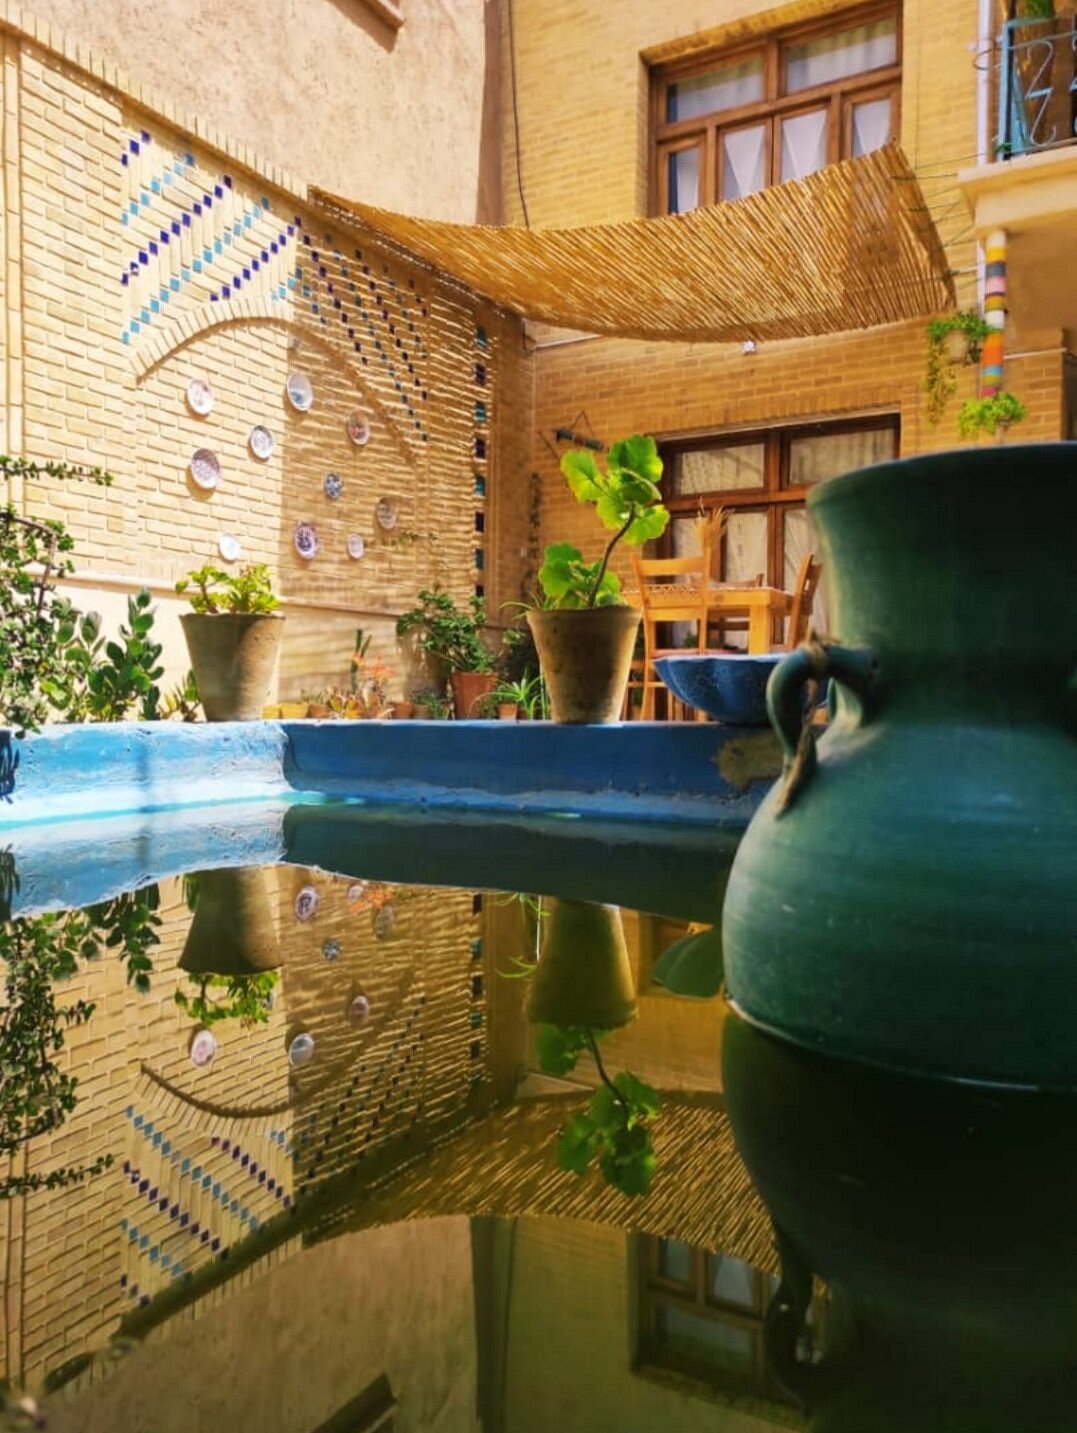 Paridokht Traditional House, Shiraz